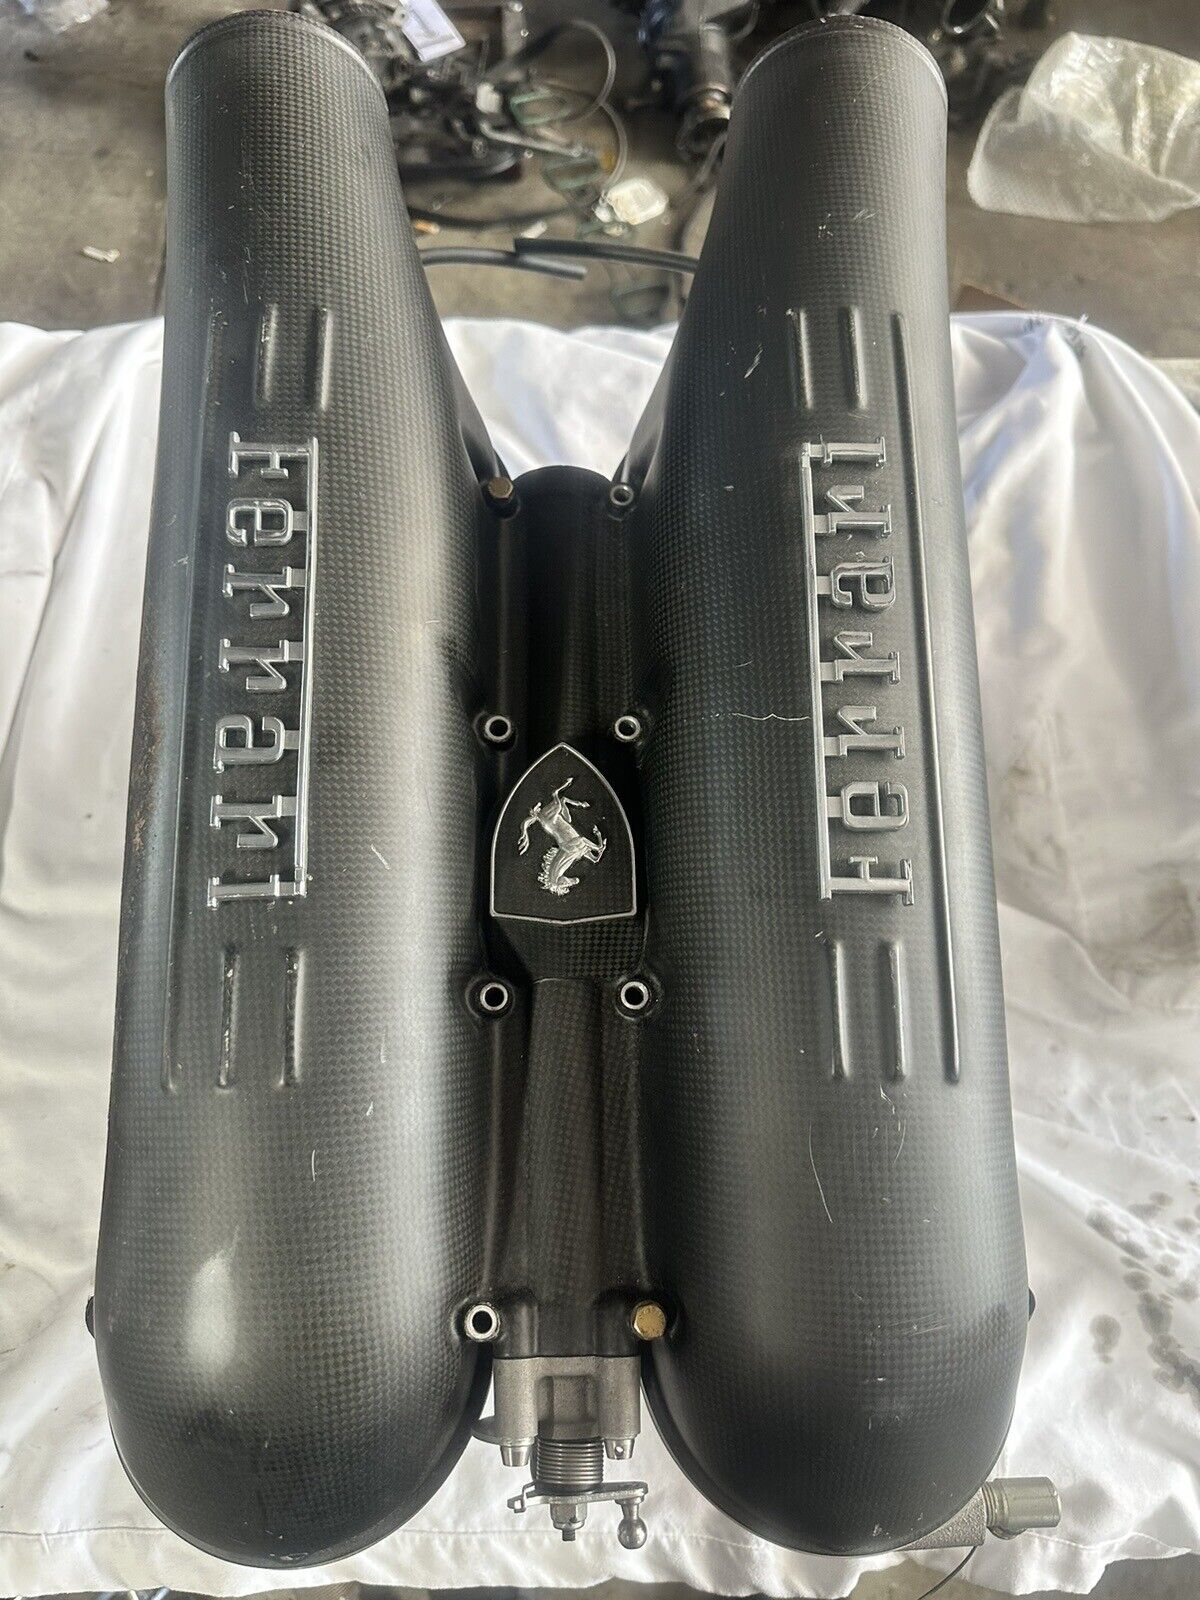 2008 05 06 07 09 Ferrari F430 Scuderia Carbon Intake Manifold Assembly #1293 M3